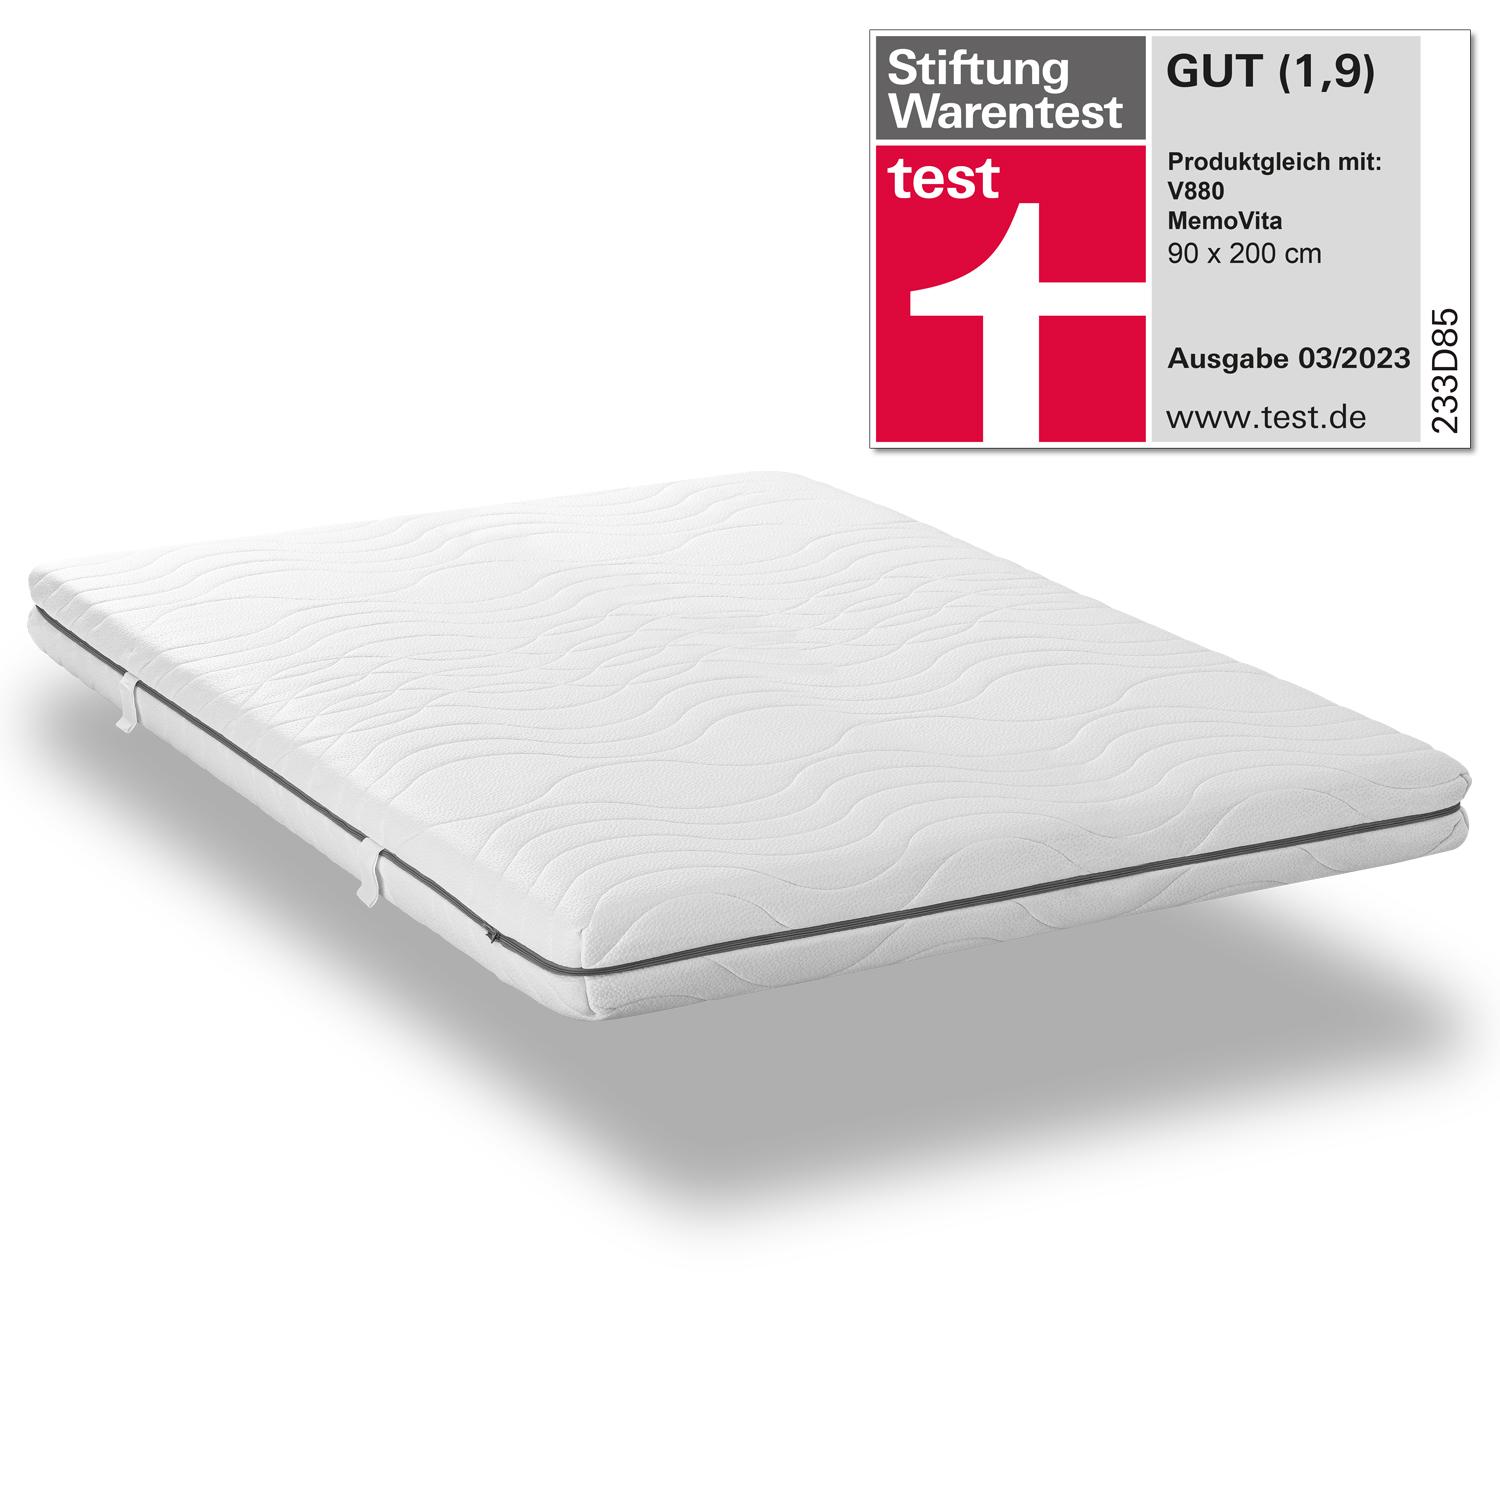 7-zone viscoelastic mattress Sleezzz Smart 180 x 200 cm, height 18 cm, firmness level H3 with air memory foam